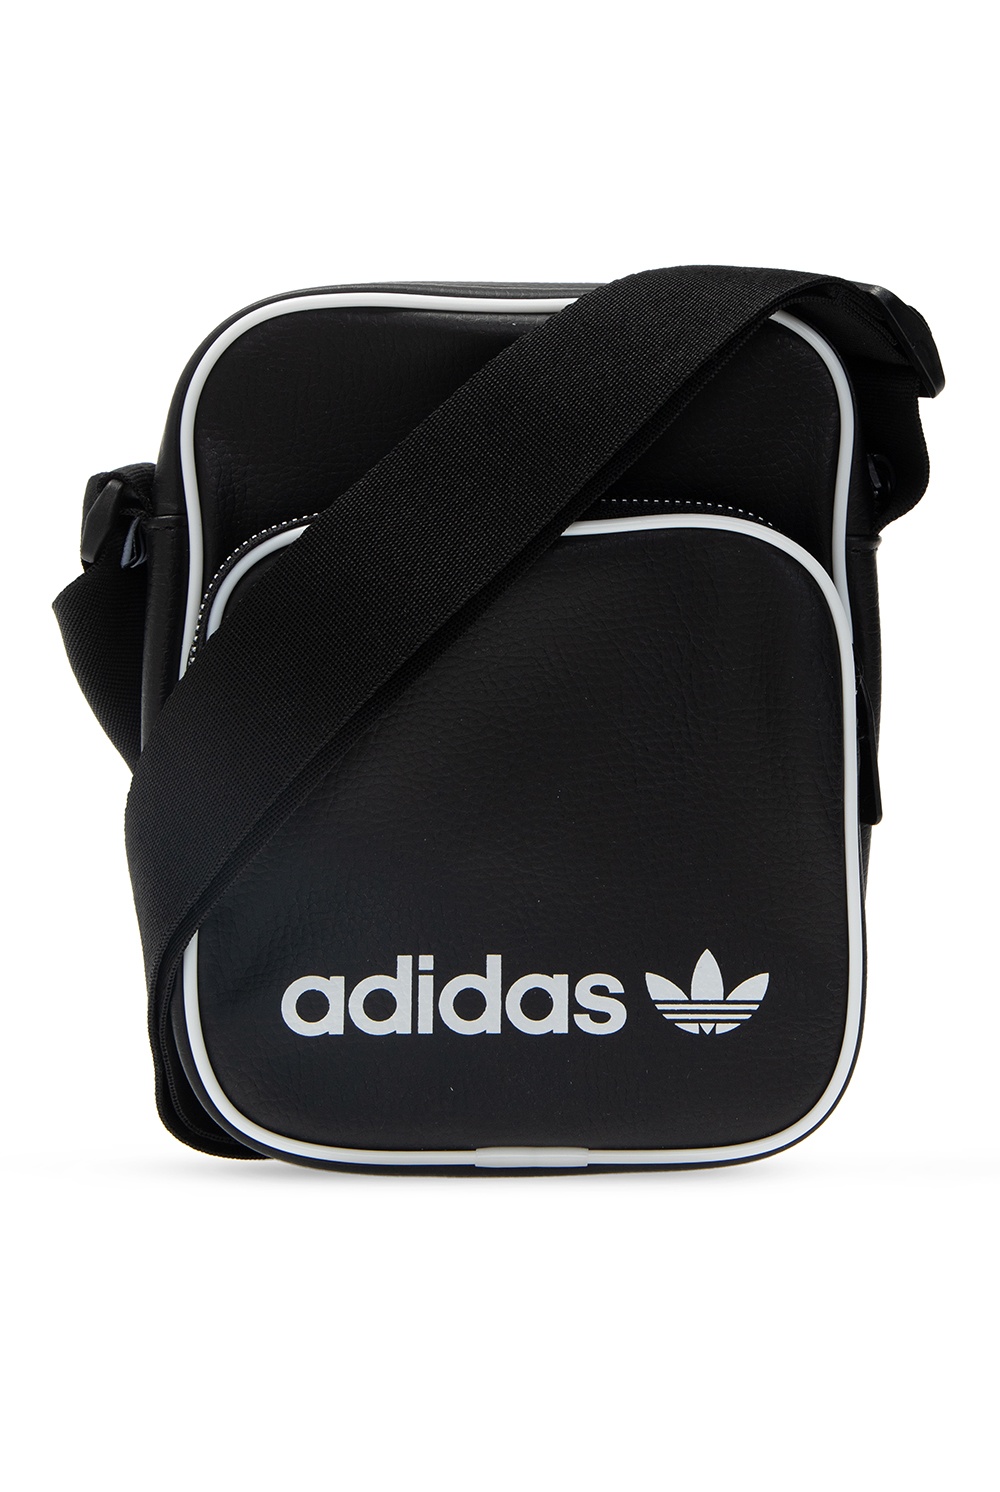 Adidas Shoulder Bag Giá Tốt T10/2023 | Mua tại Lazada.vn